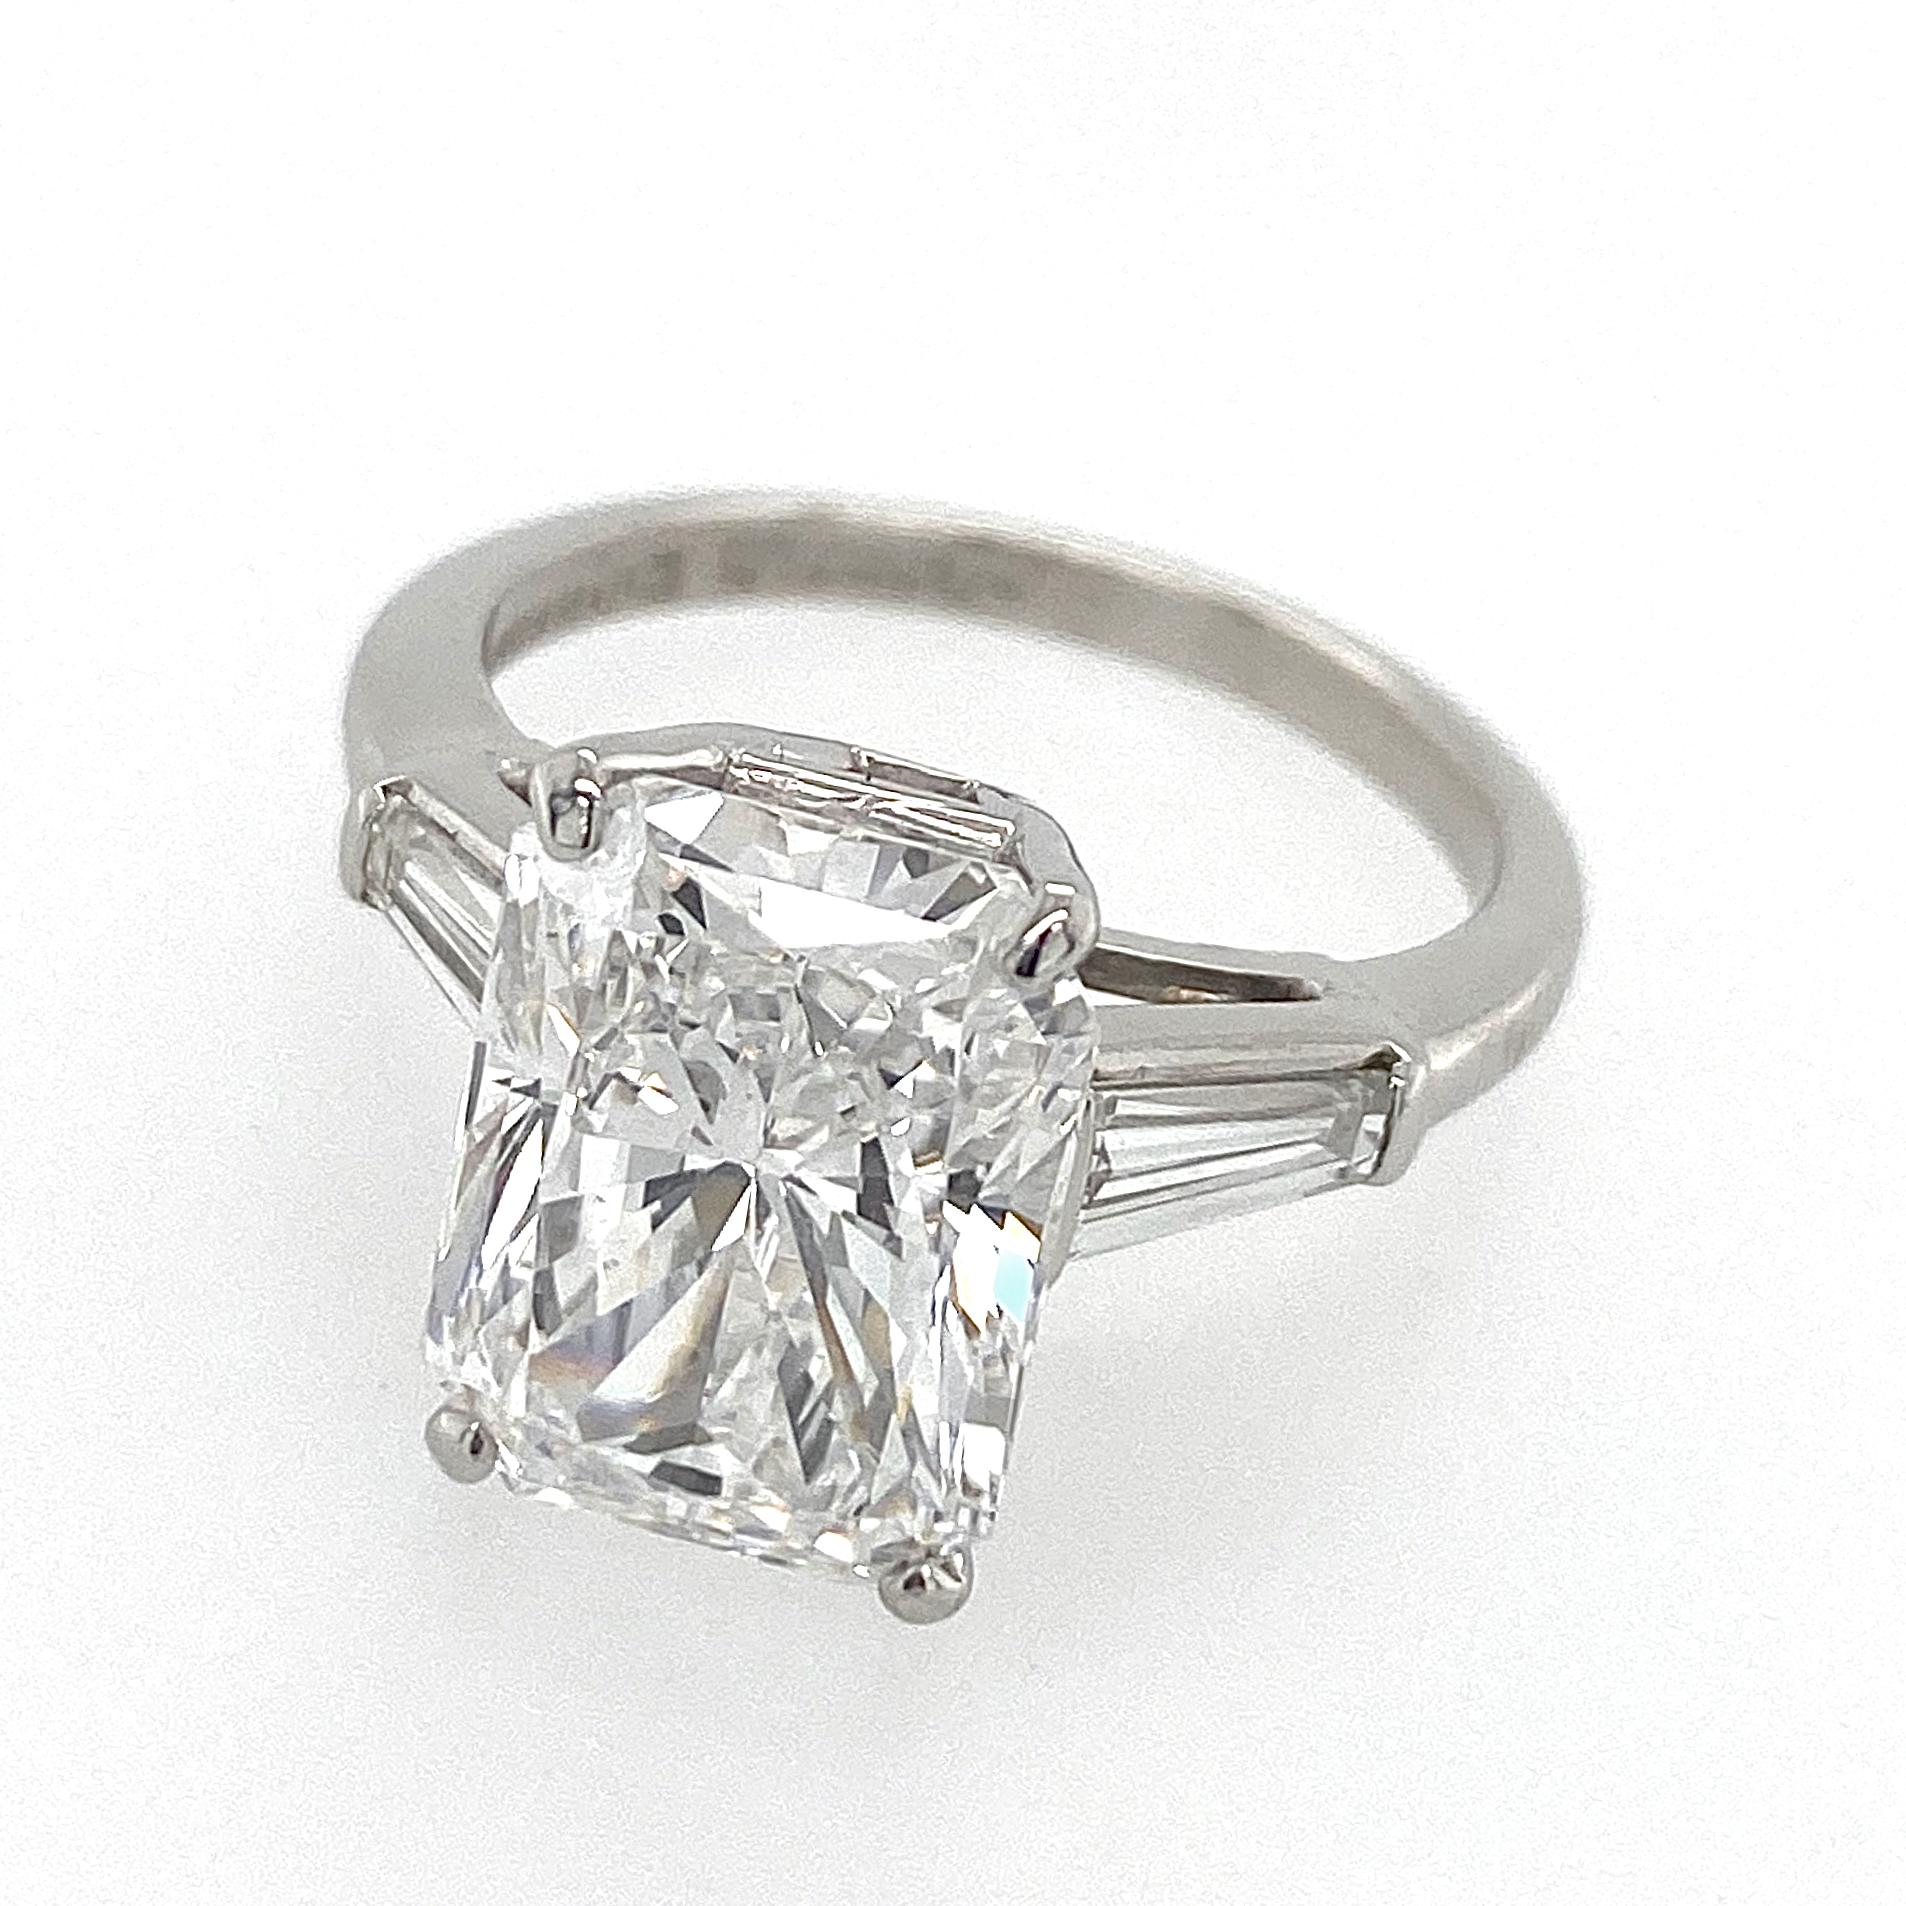 4.06 Carat E-VVS1 GIA Certified Radiant Cut Diamond in Deco-Era Platinum Ring 7